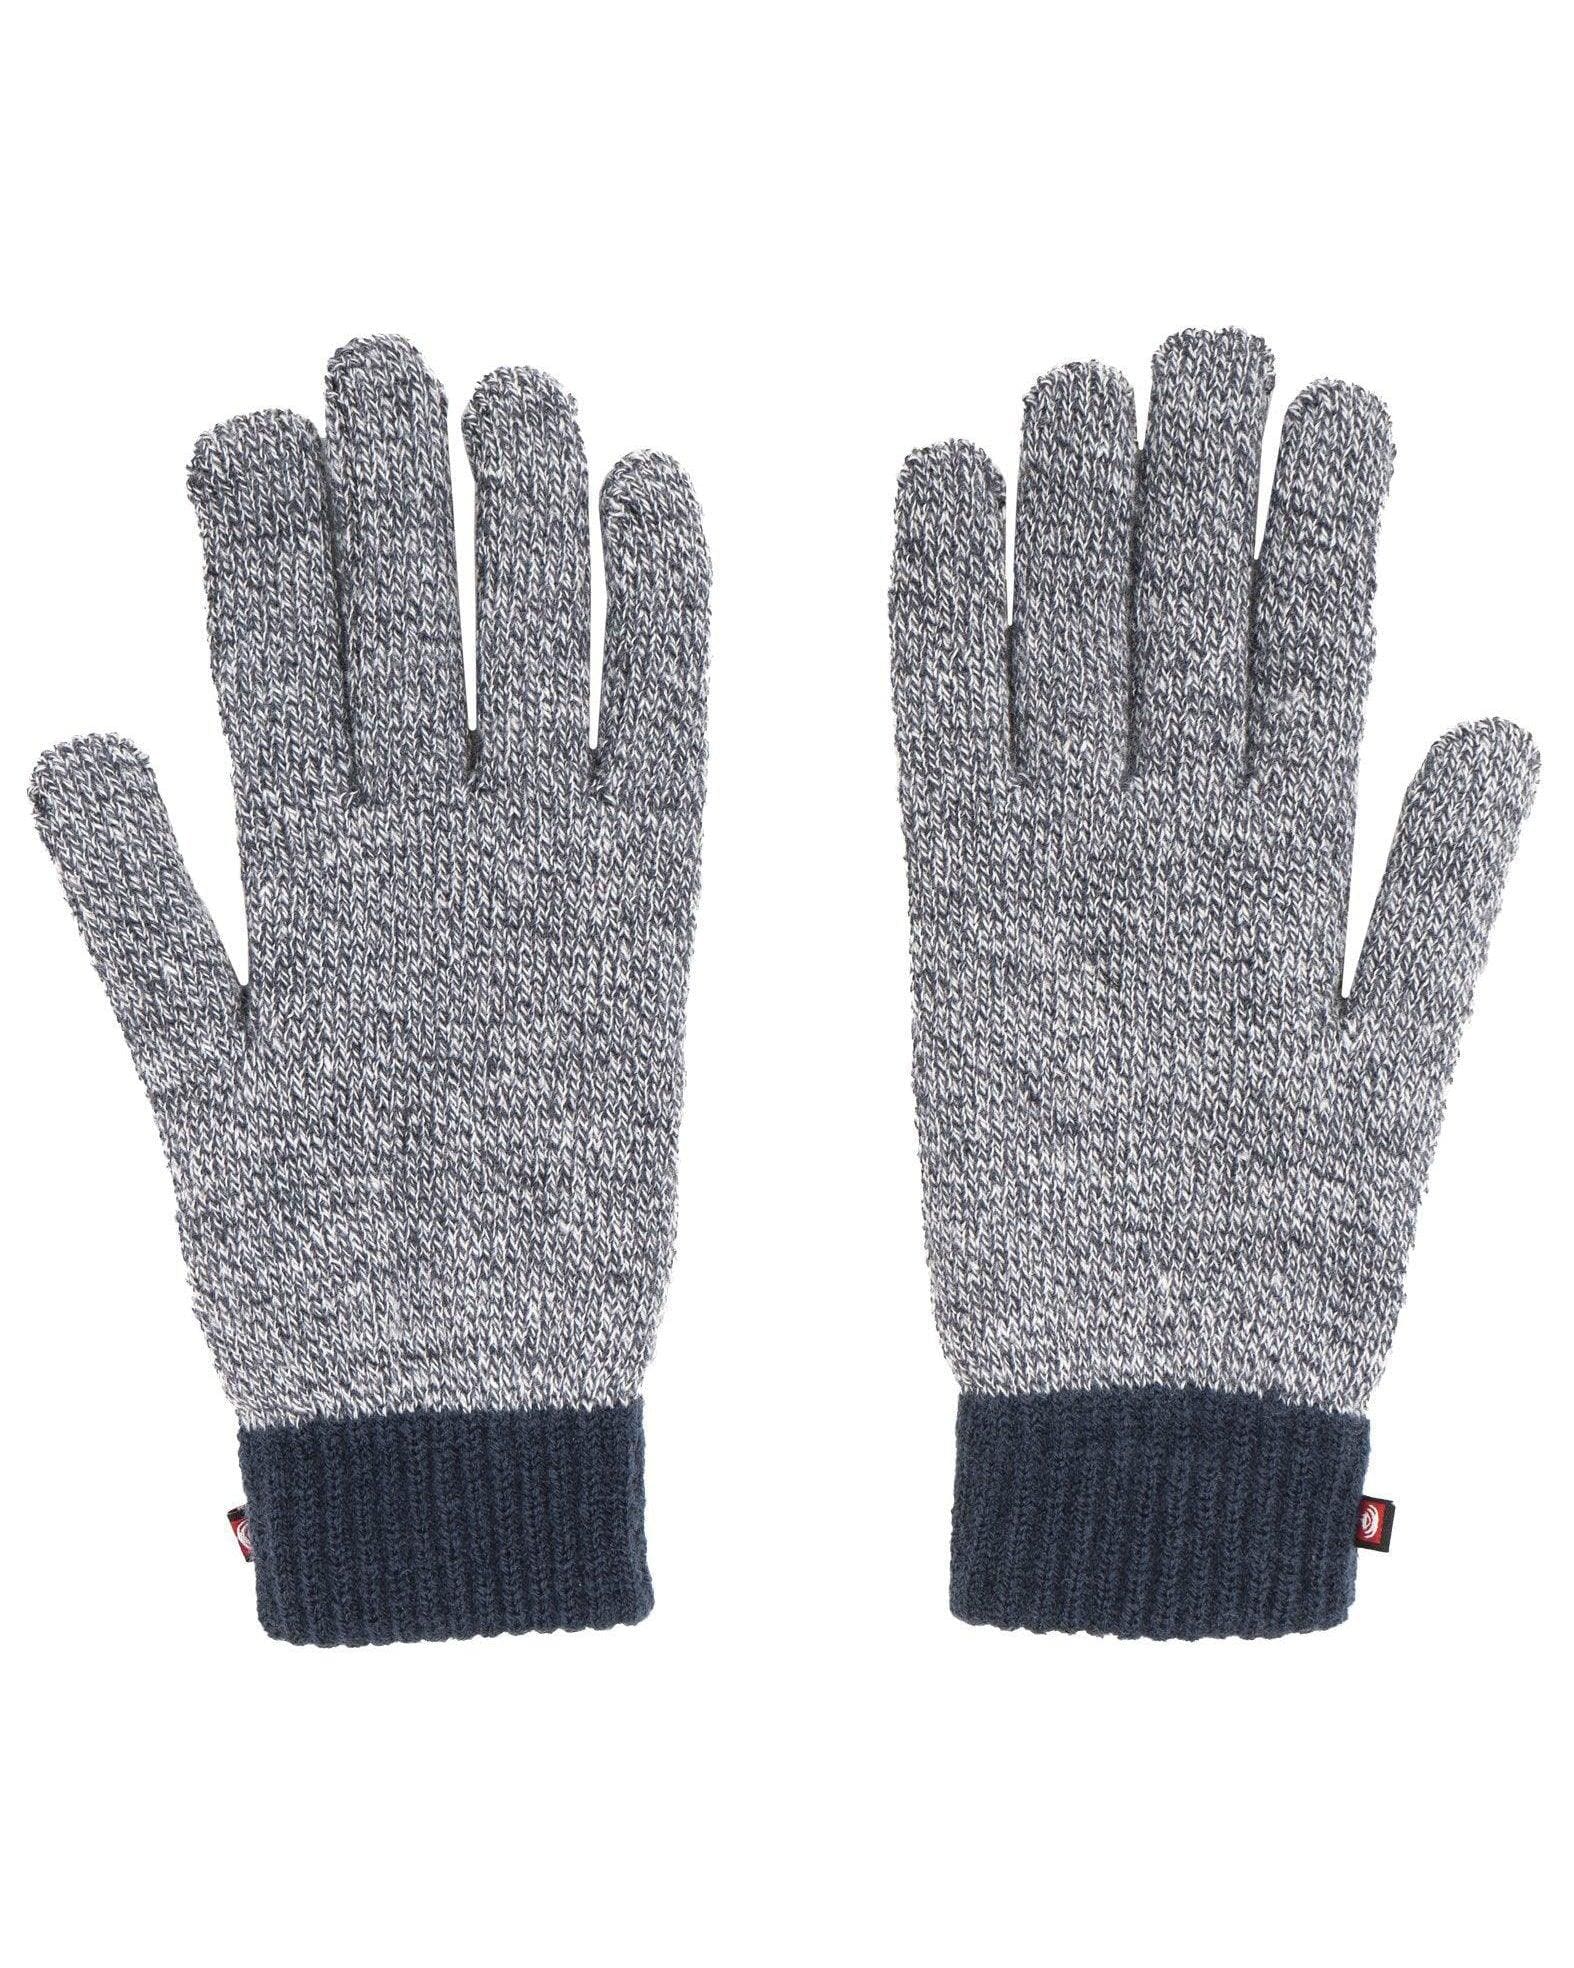 Off Grid - Fleece Lined Gloves - Dark Blue